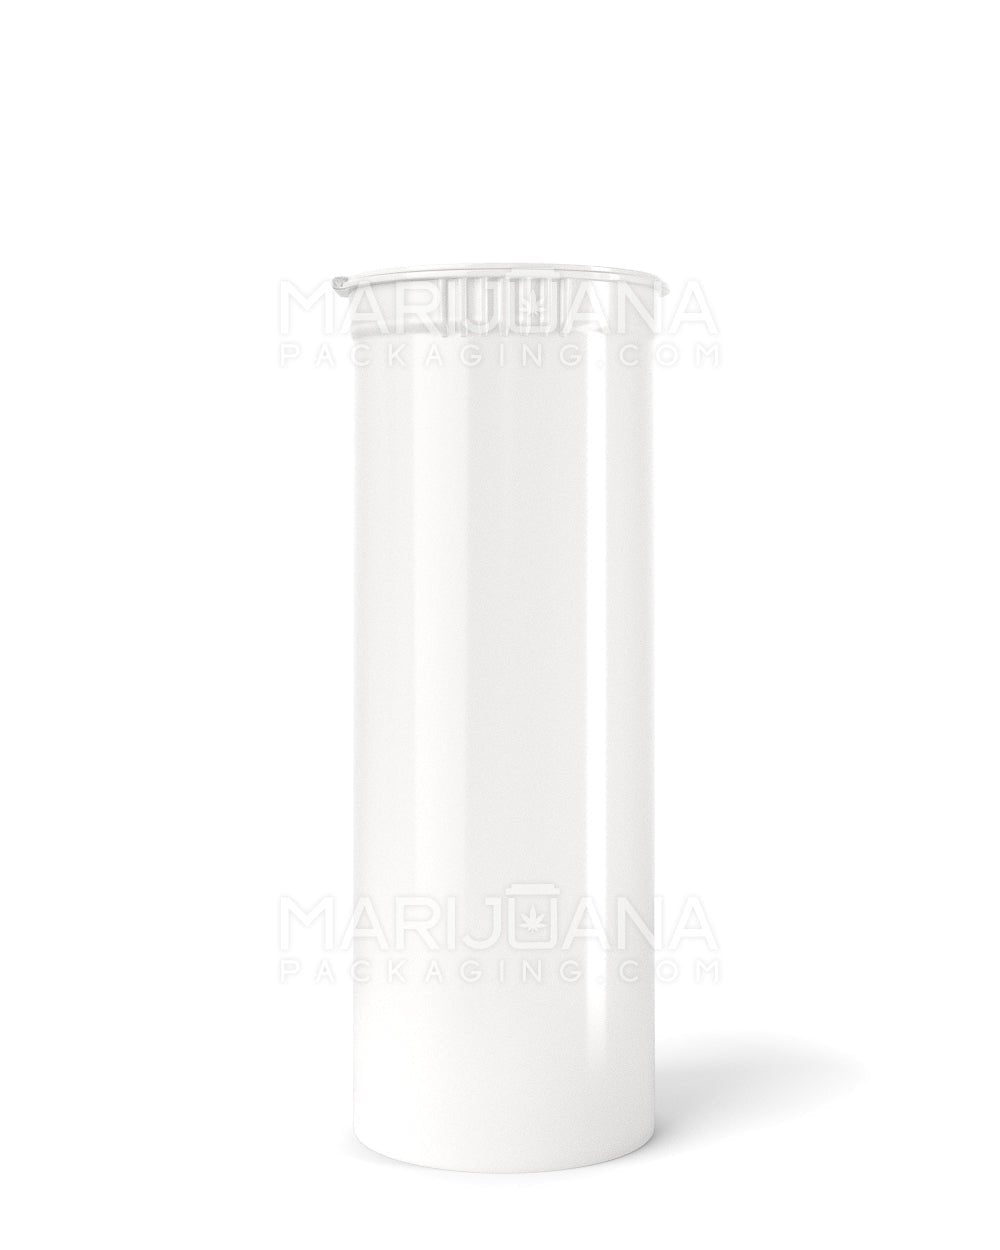 POLLEN GEAR | Child Resistant Kush Opaque White Pop Top Bottles | 60dr - 14g - 128 Count - 2